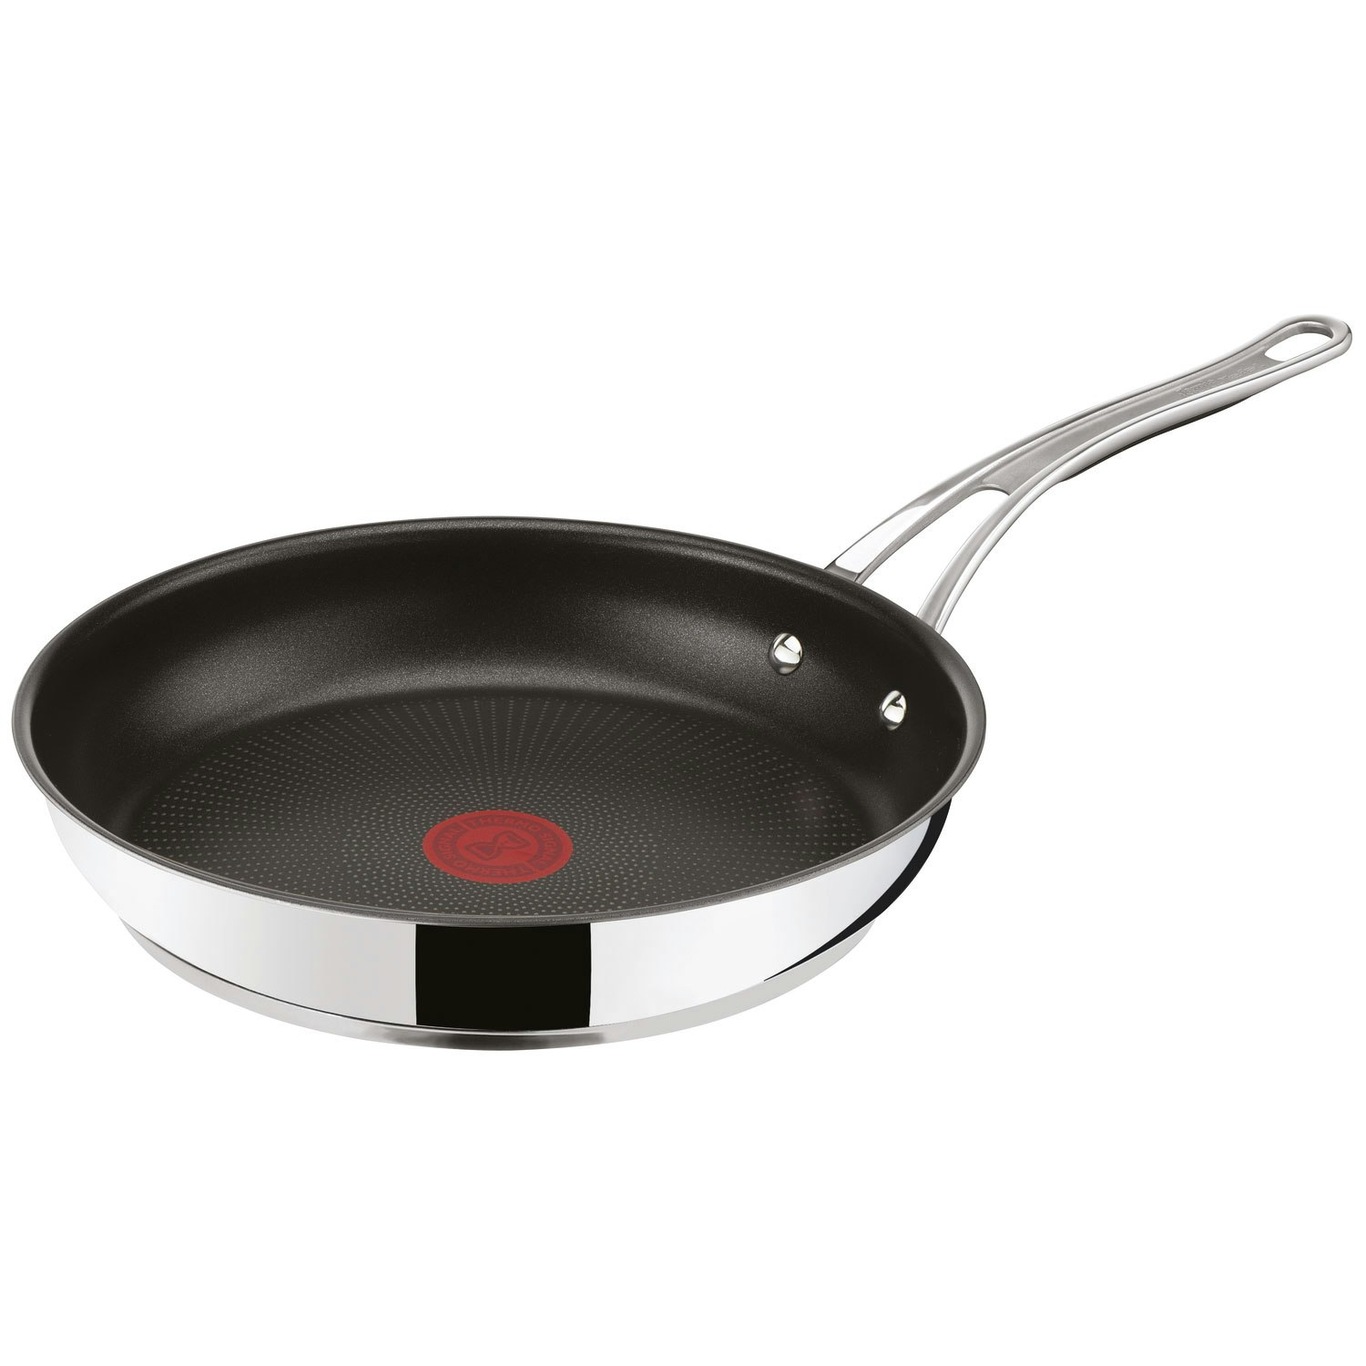 Jamie Oliver Cook's Classic Frying Pan, 30 cm - Tefal @ RoyalDesign